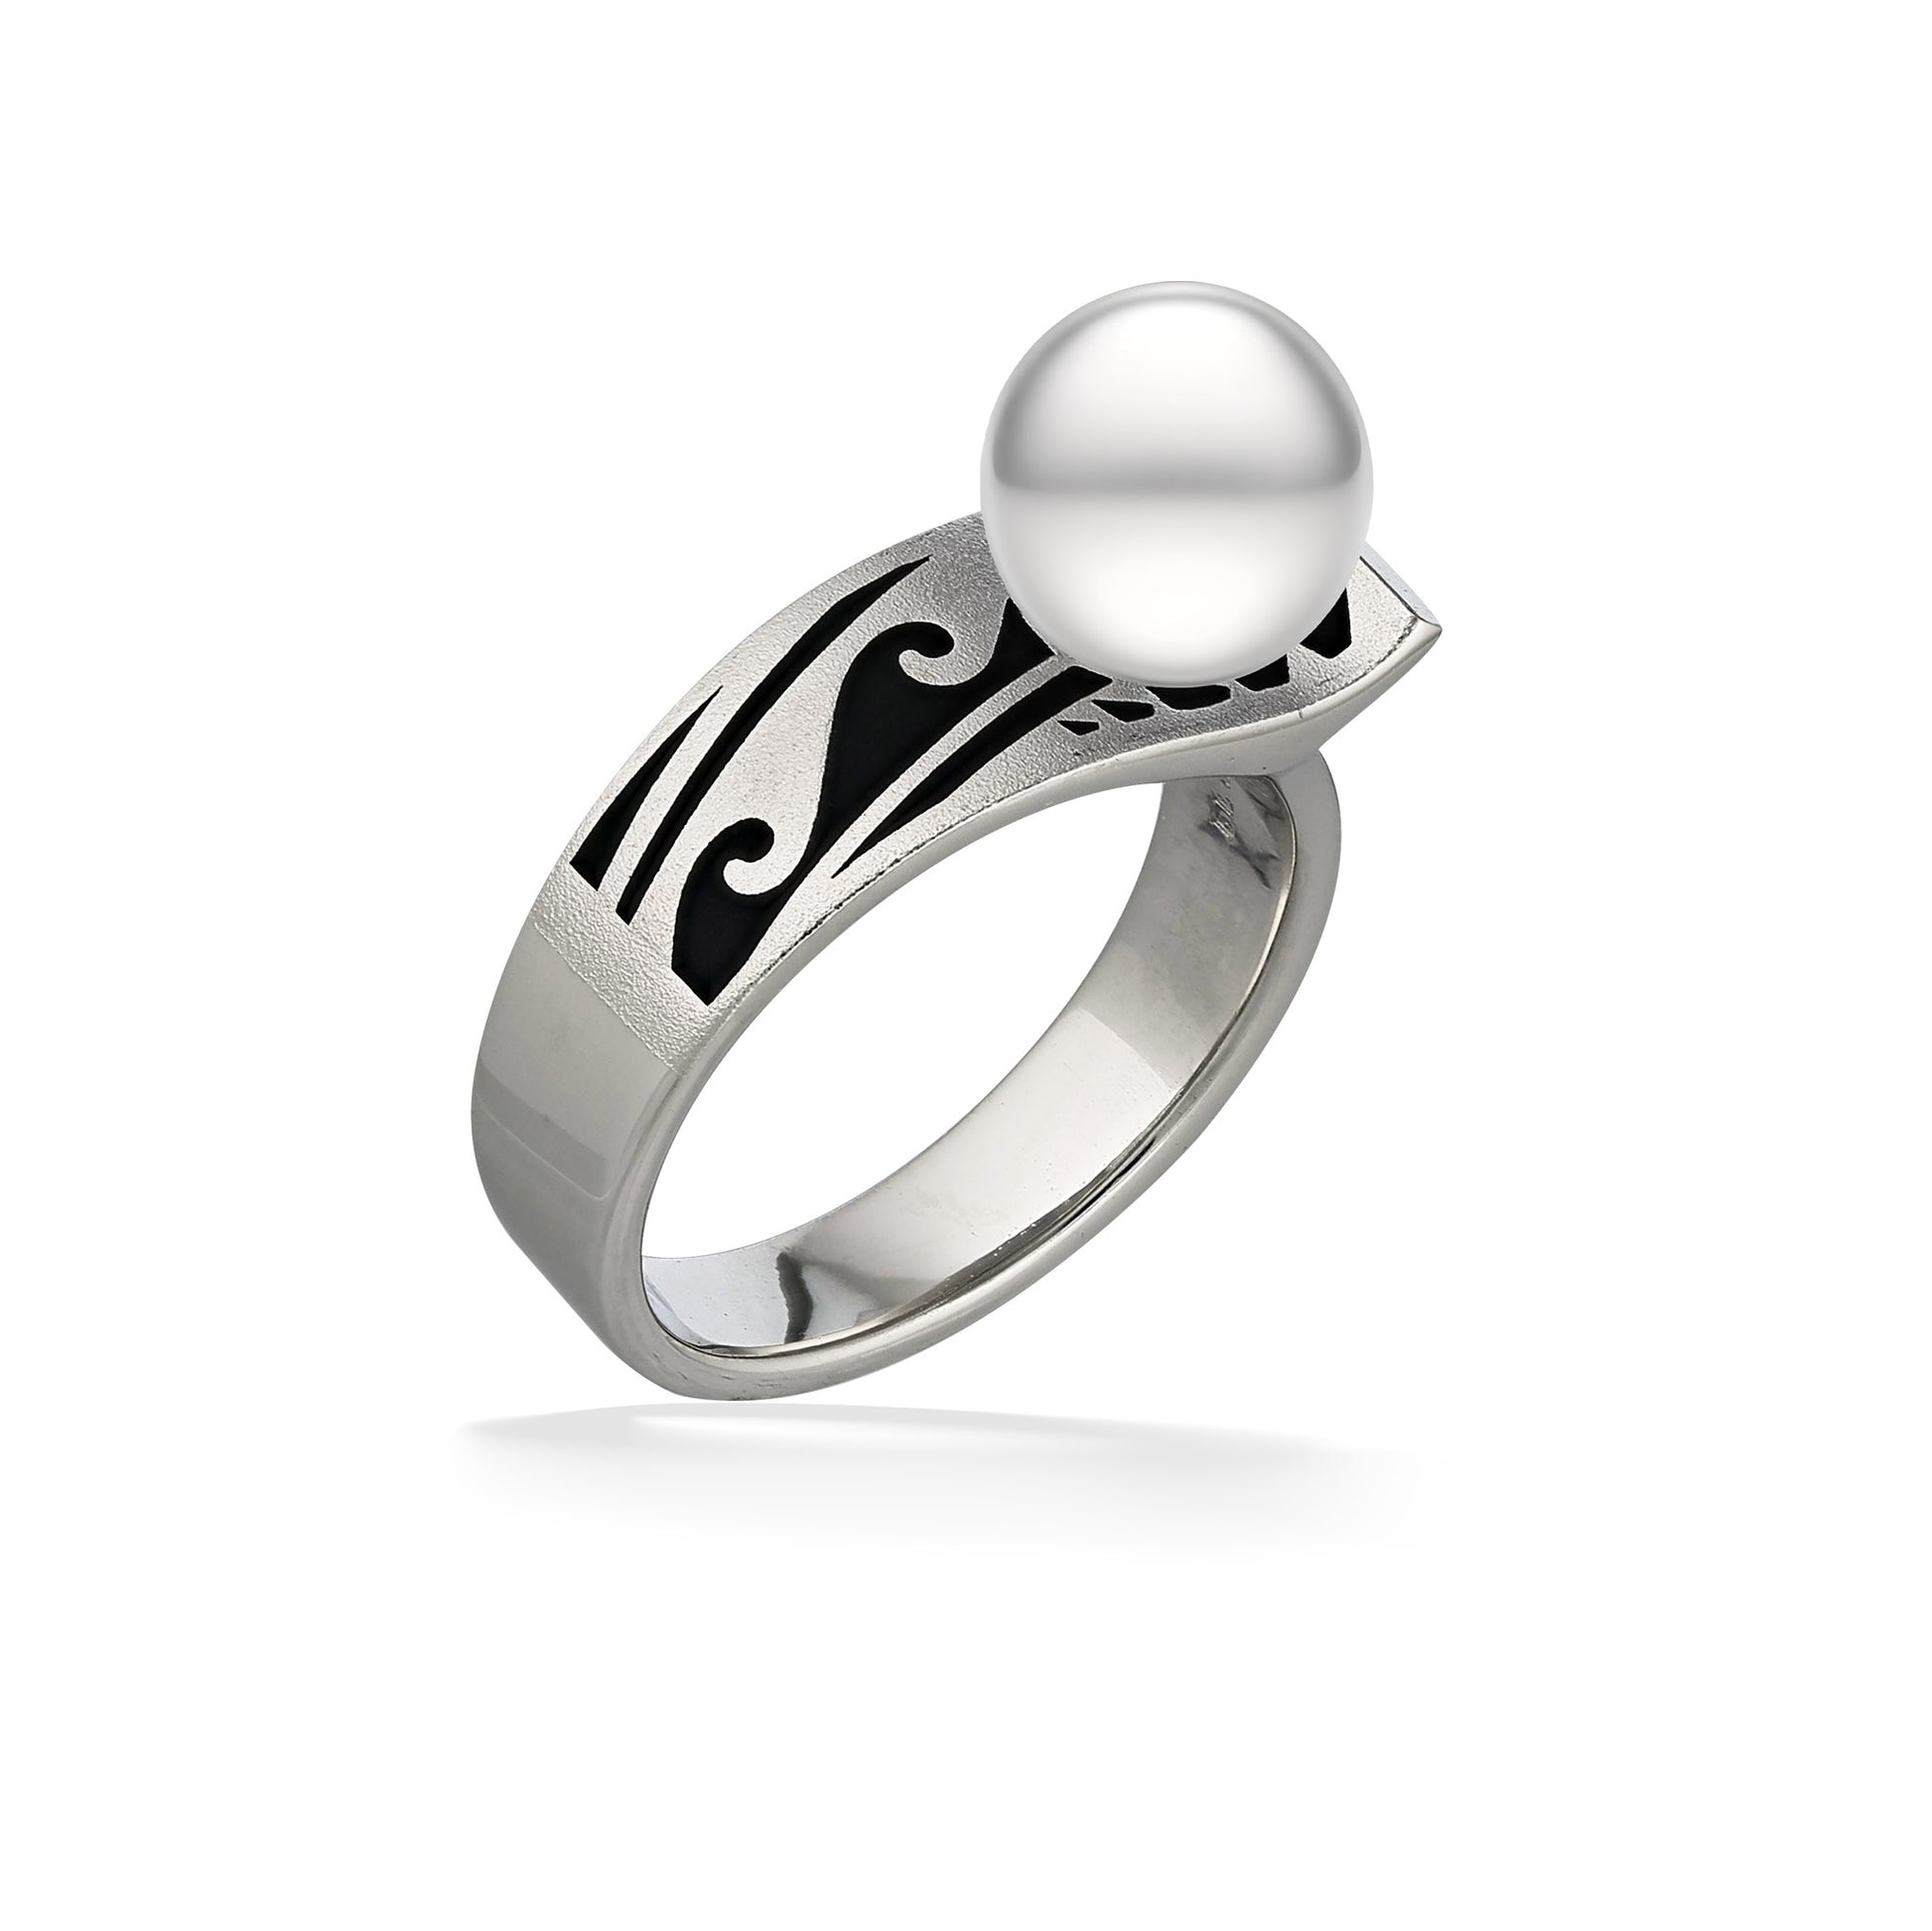 01280 - Sterling Silver - Ocean Kai Ring, Size 10